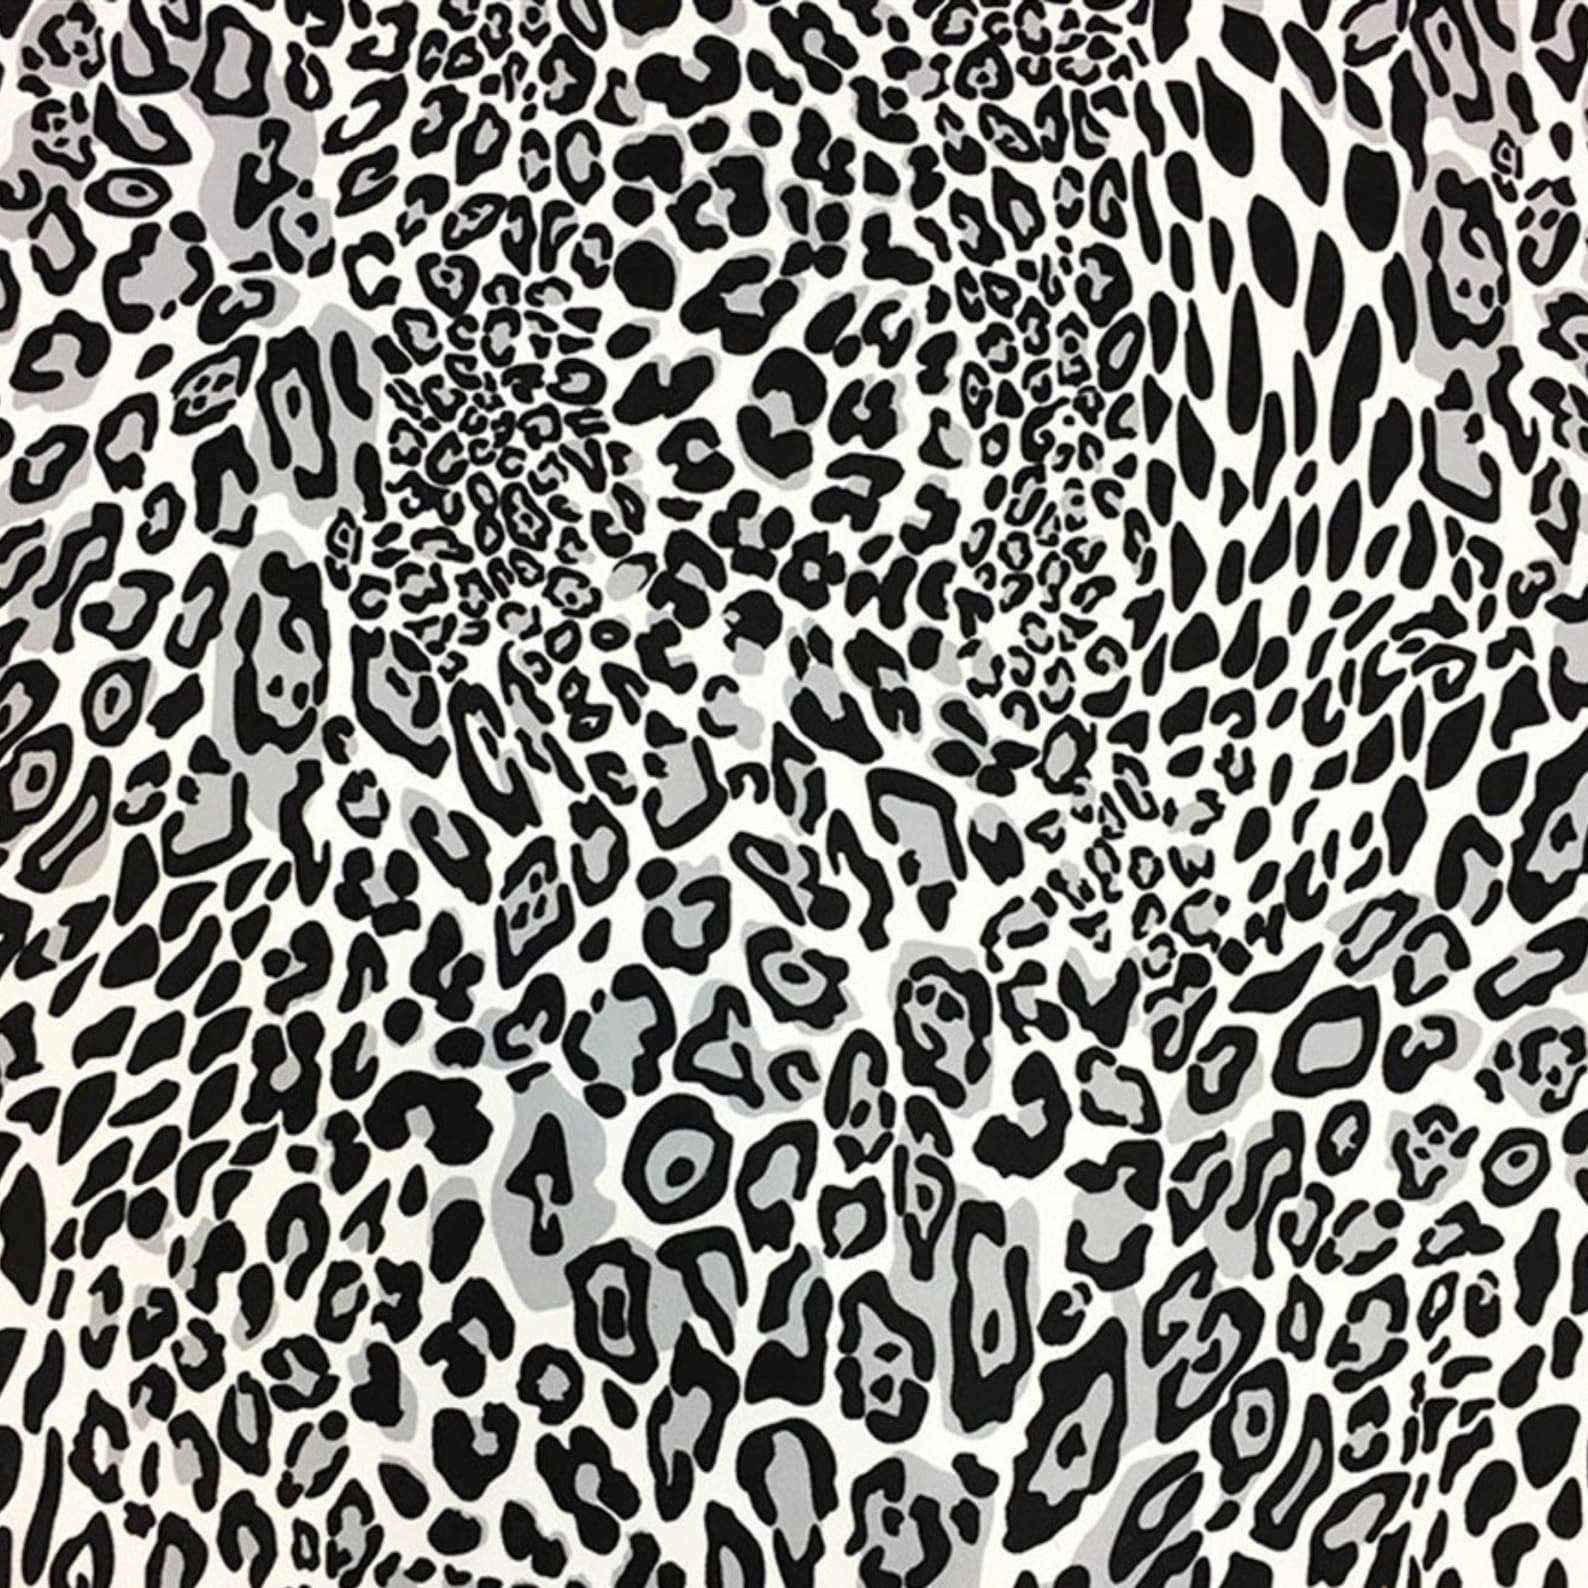 Leopard Print Fabric by the Yard Black White Grey Cheetah - Etsy